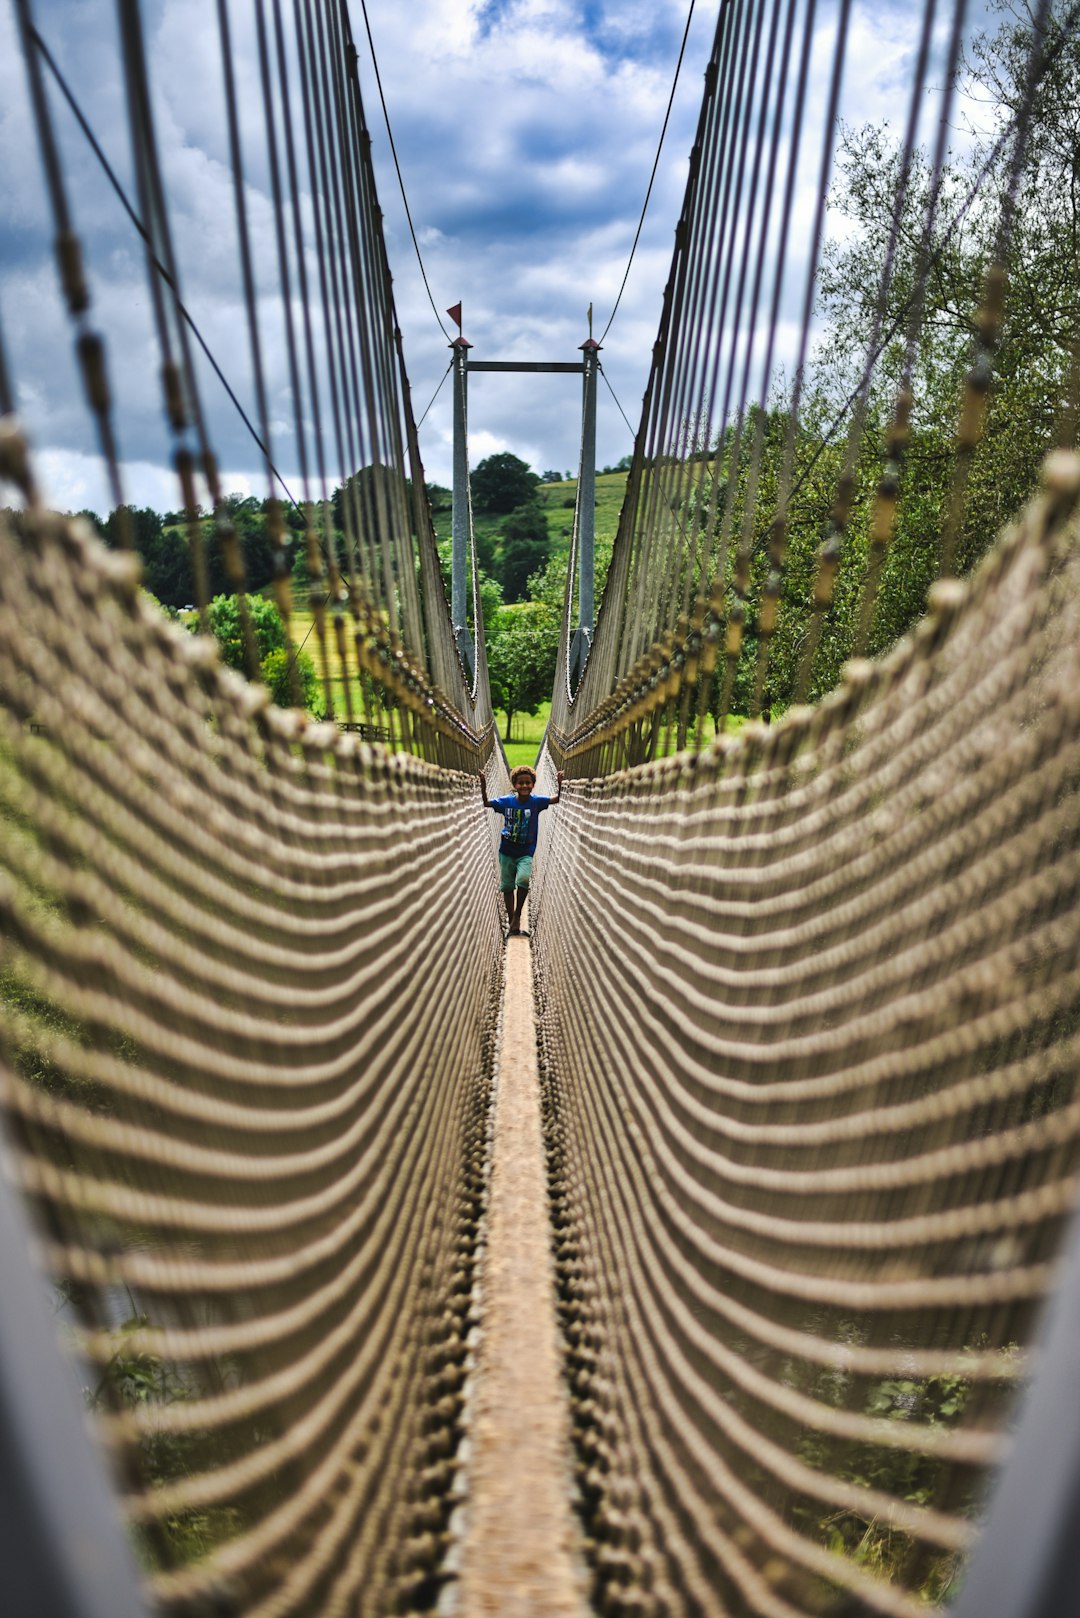 travelers stories about Suspension bridge in Bad Sobernheim, Germany